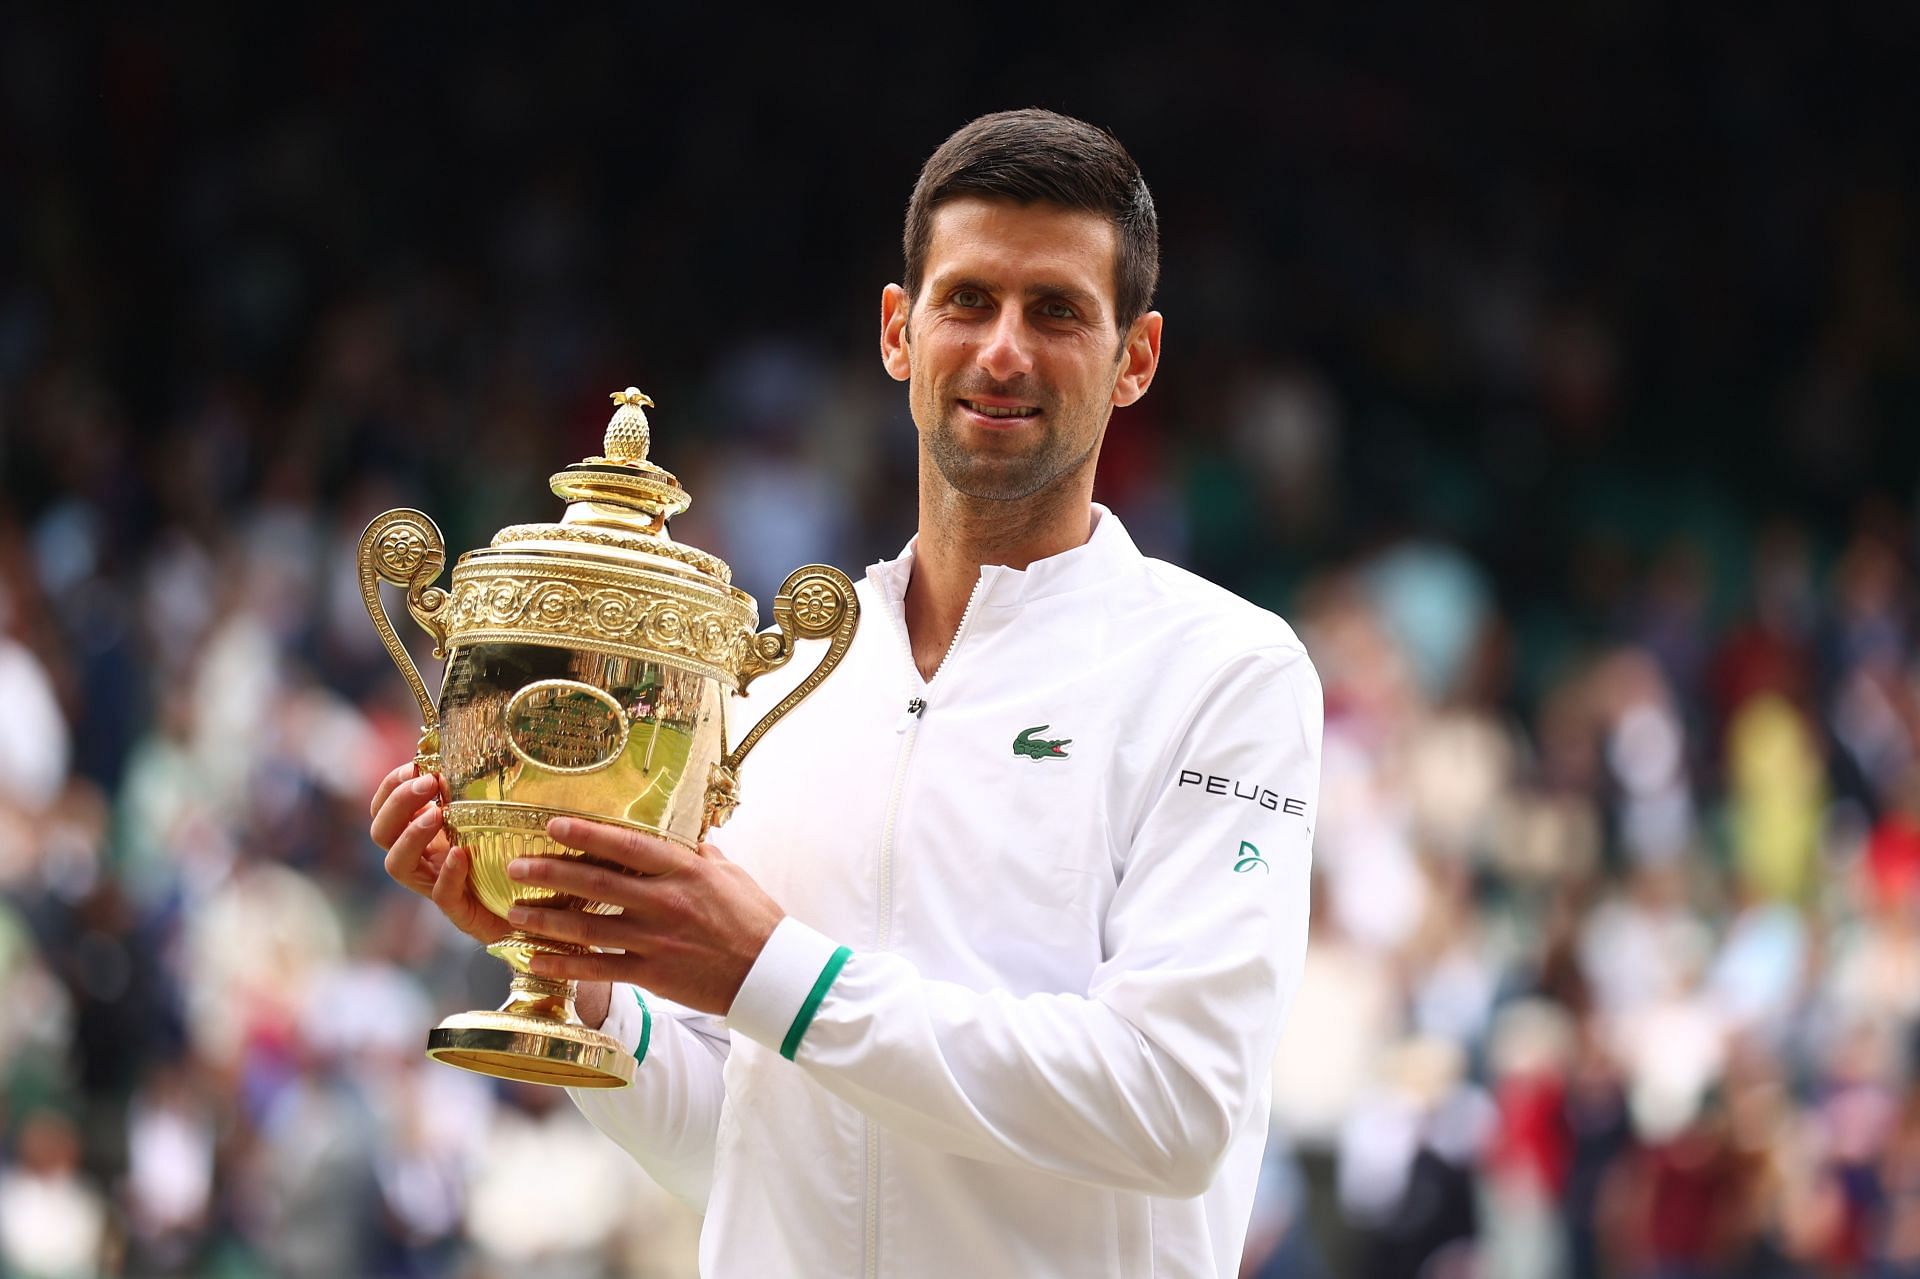 Novak Djokovic at the 2021 Wimbledon Championships